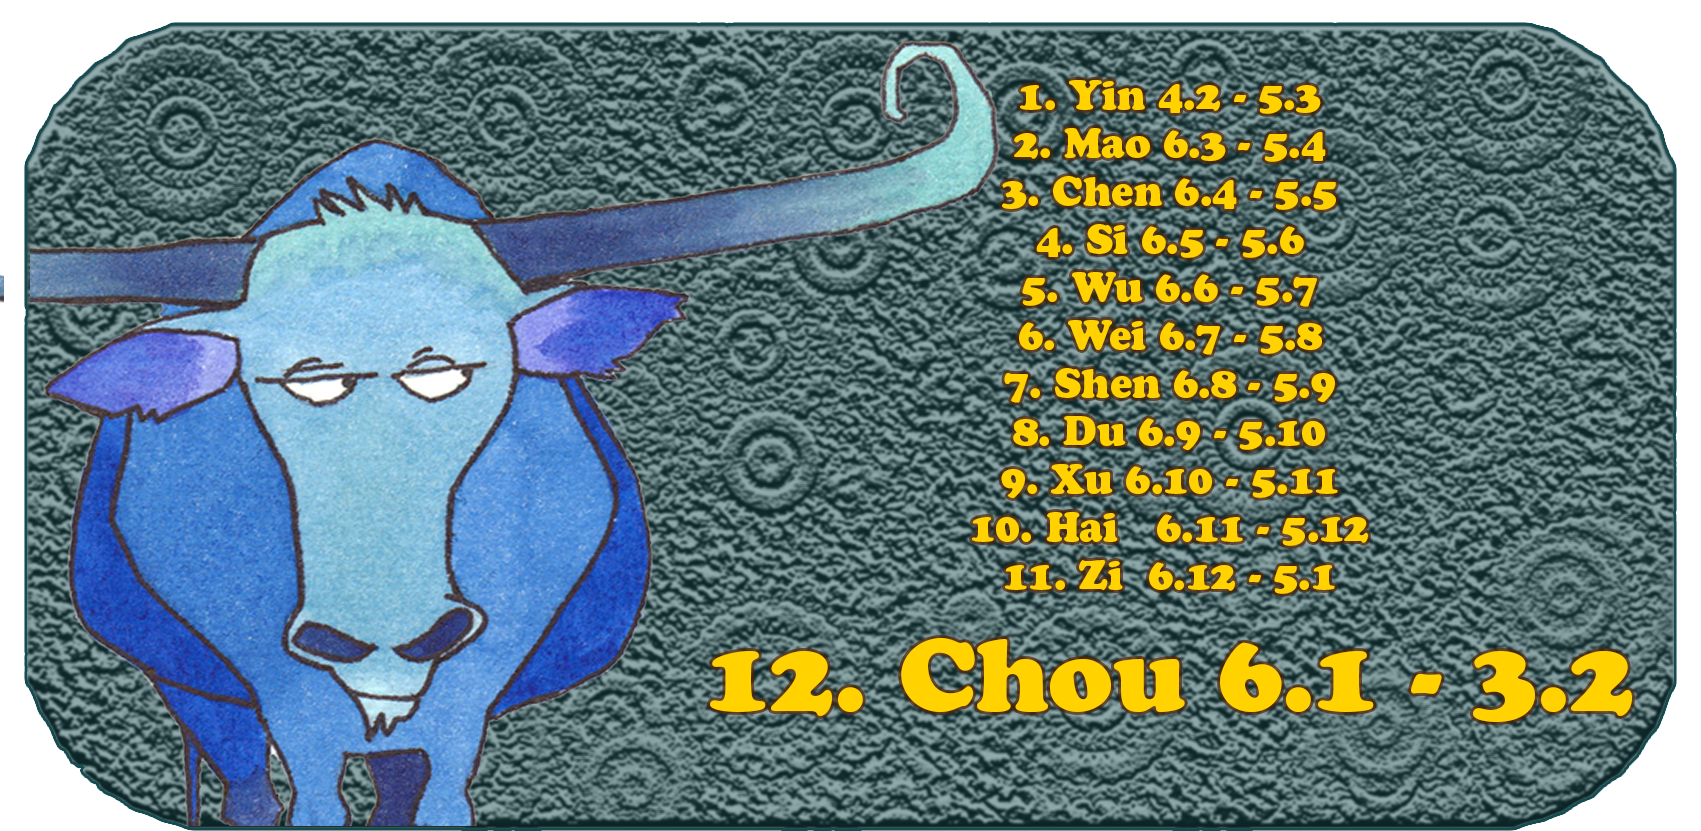 Zodíaco chino | Los doce animales chinos | Tauro, enero, mes 12, Chou